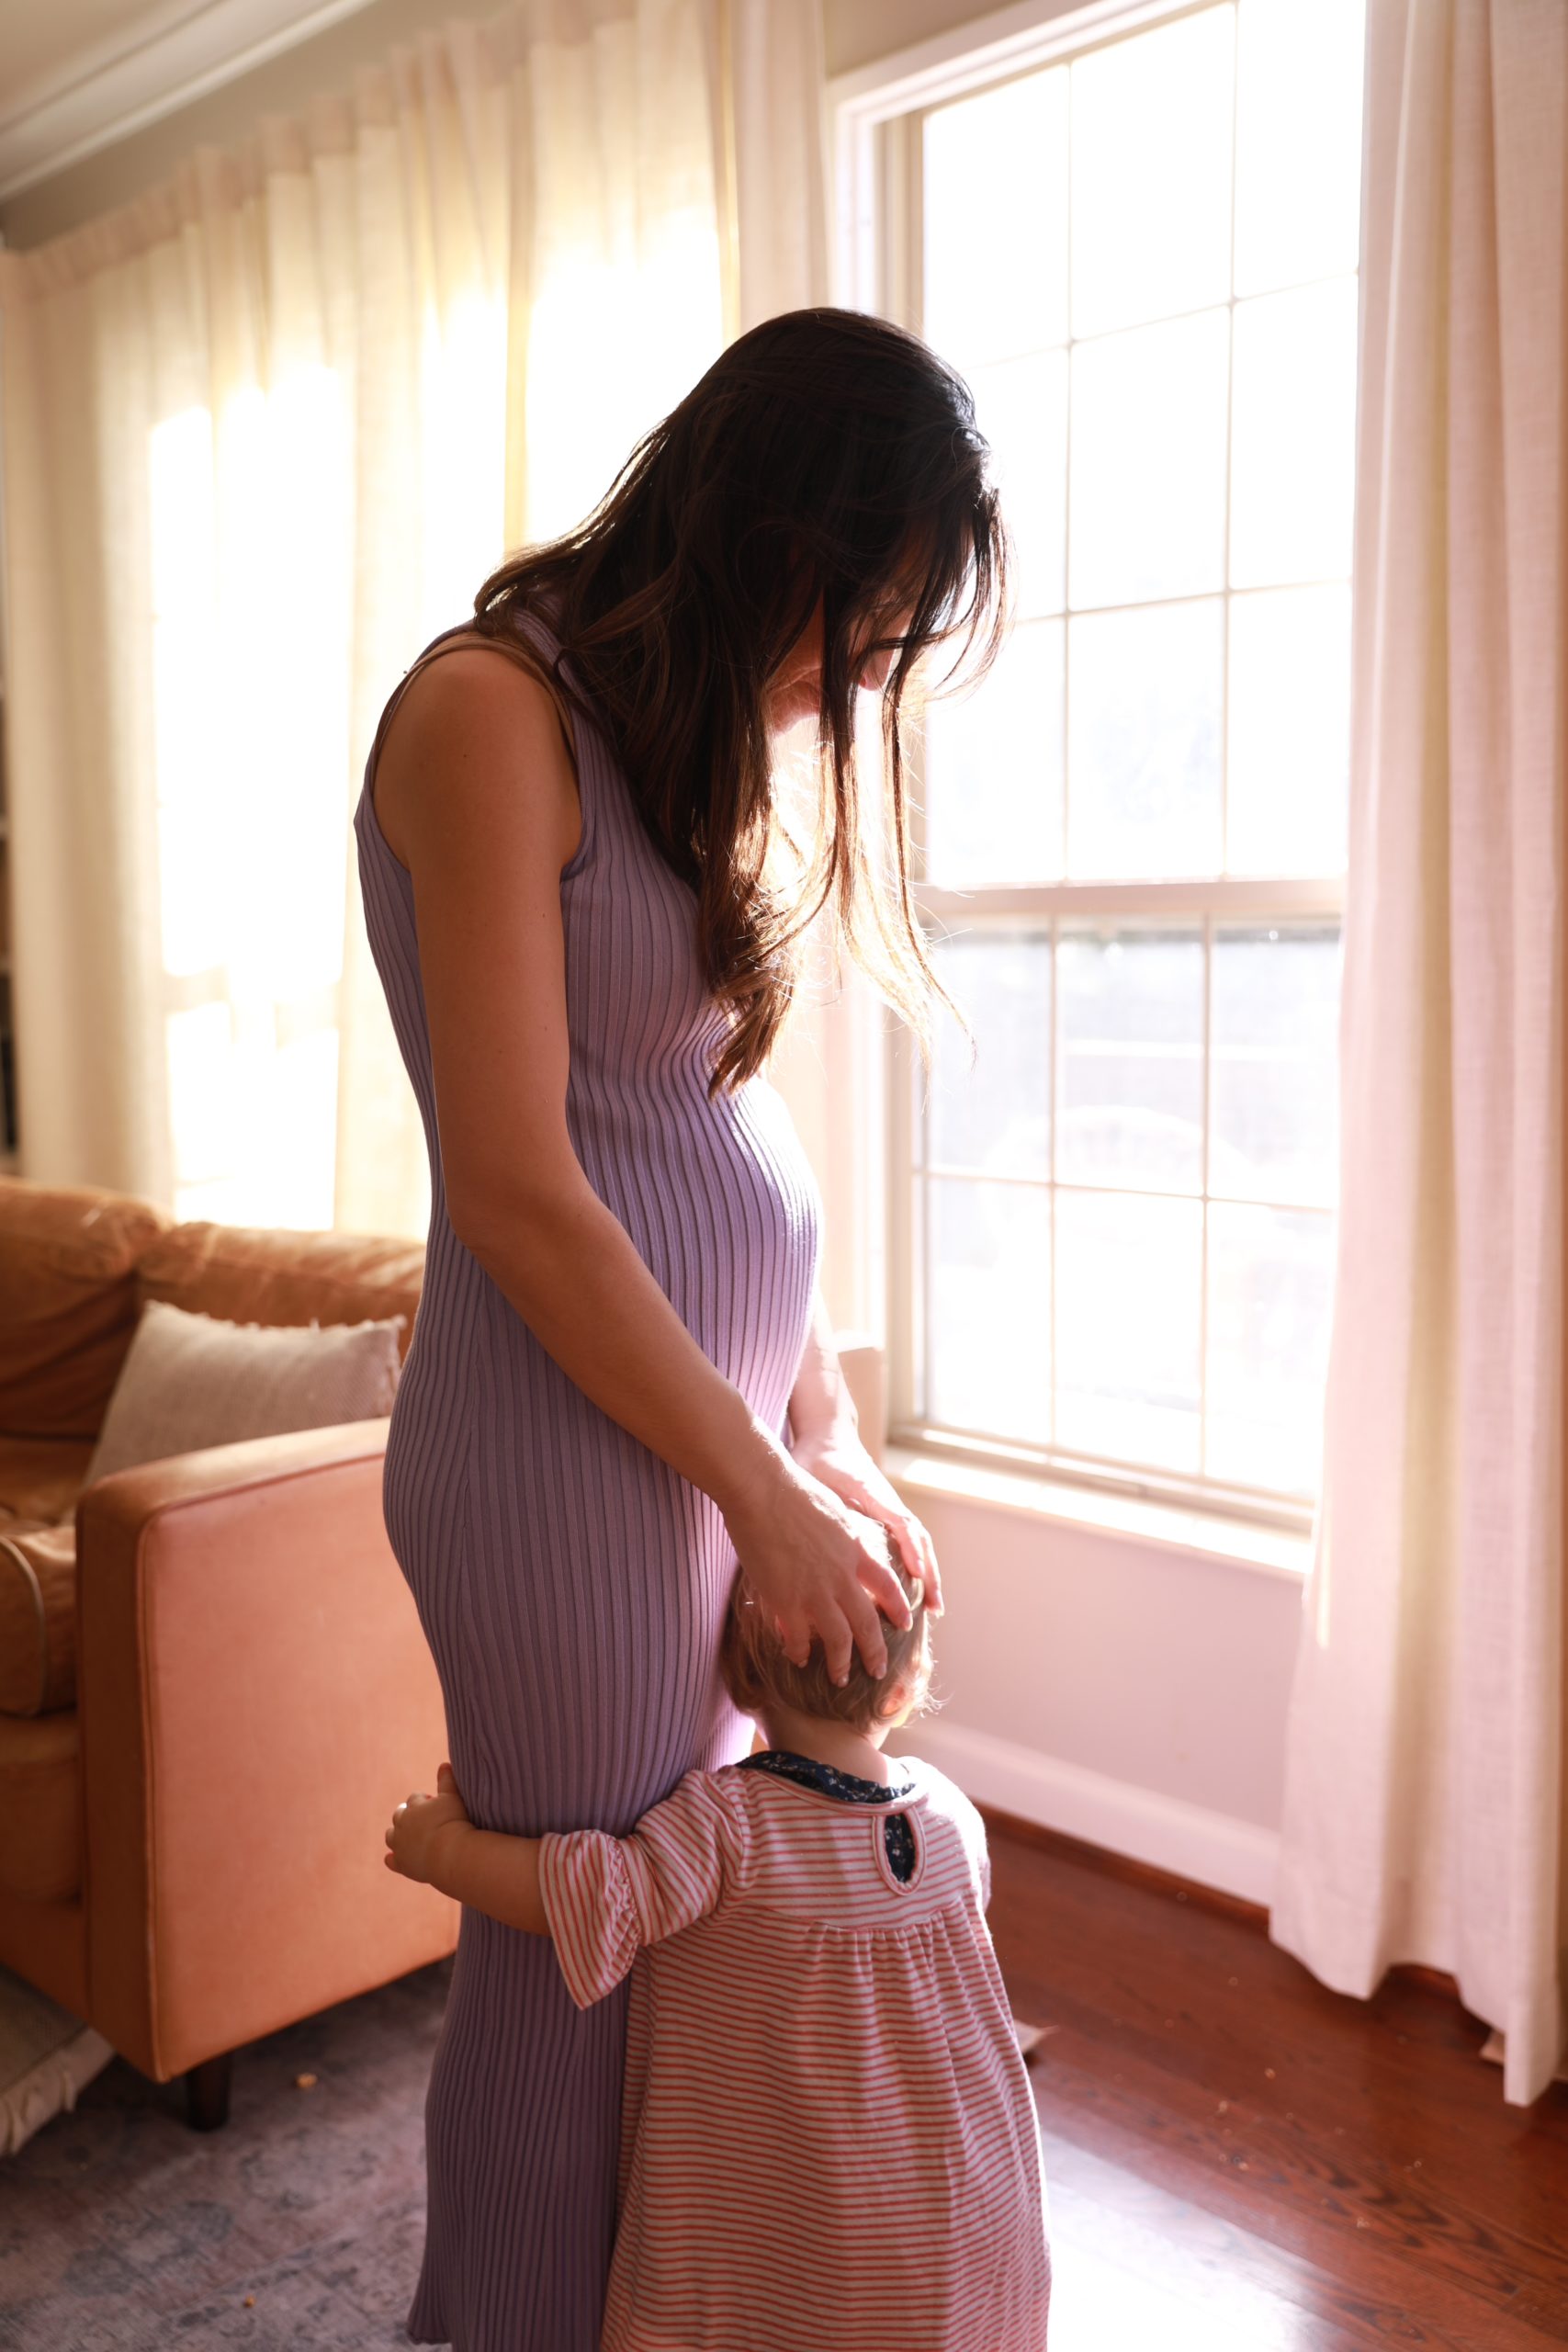 first trimester - pregnancy